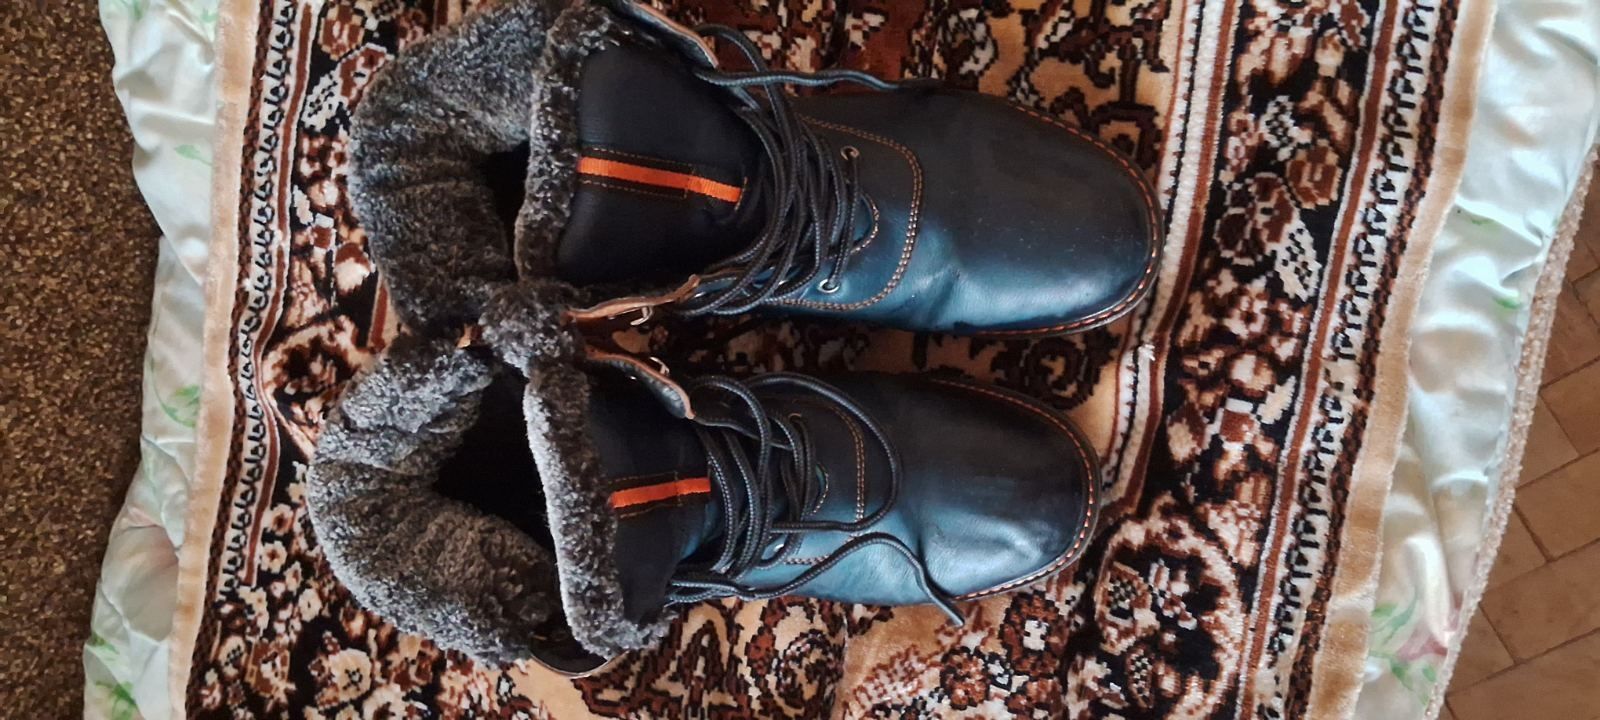 Зимний батиночки теплые хорошие